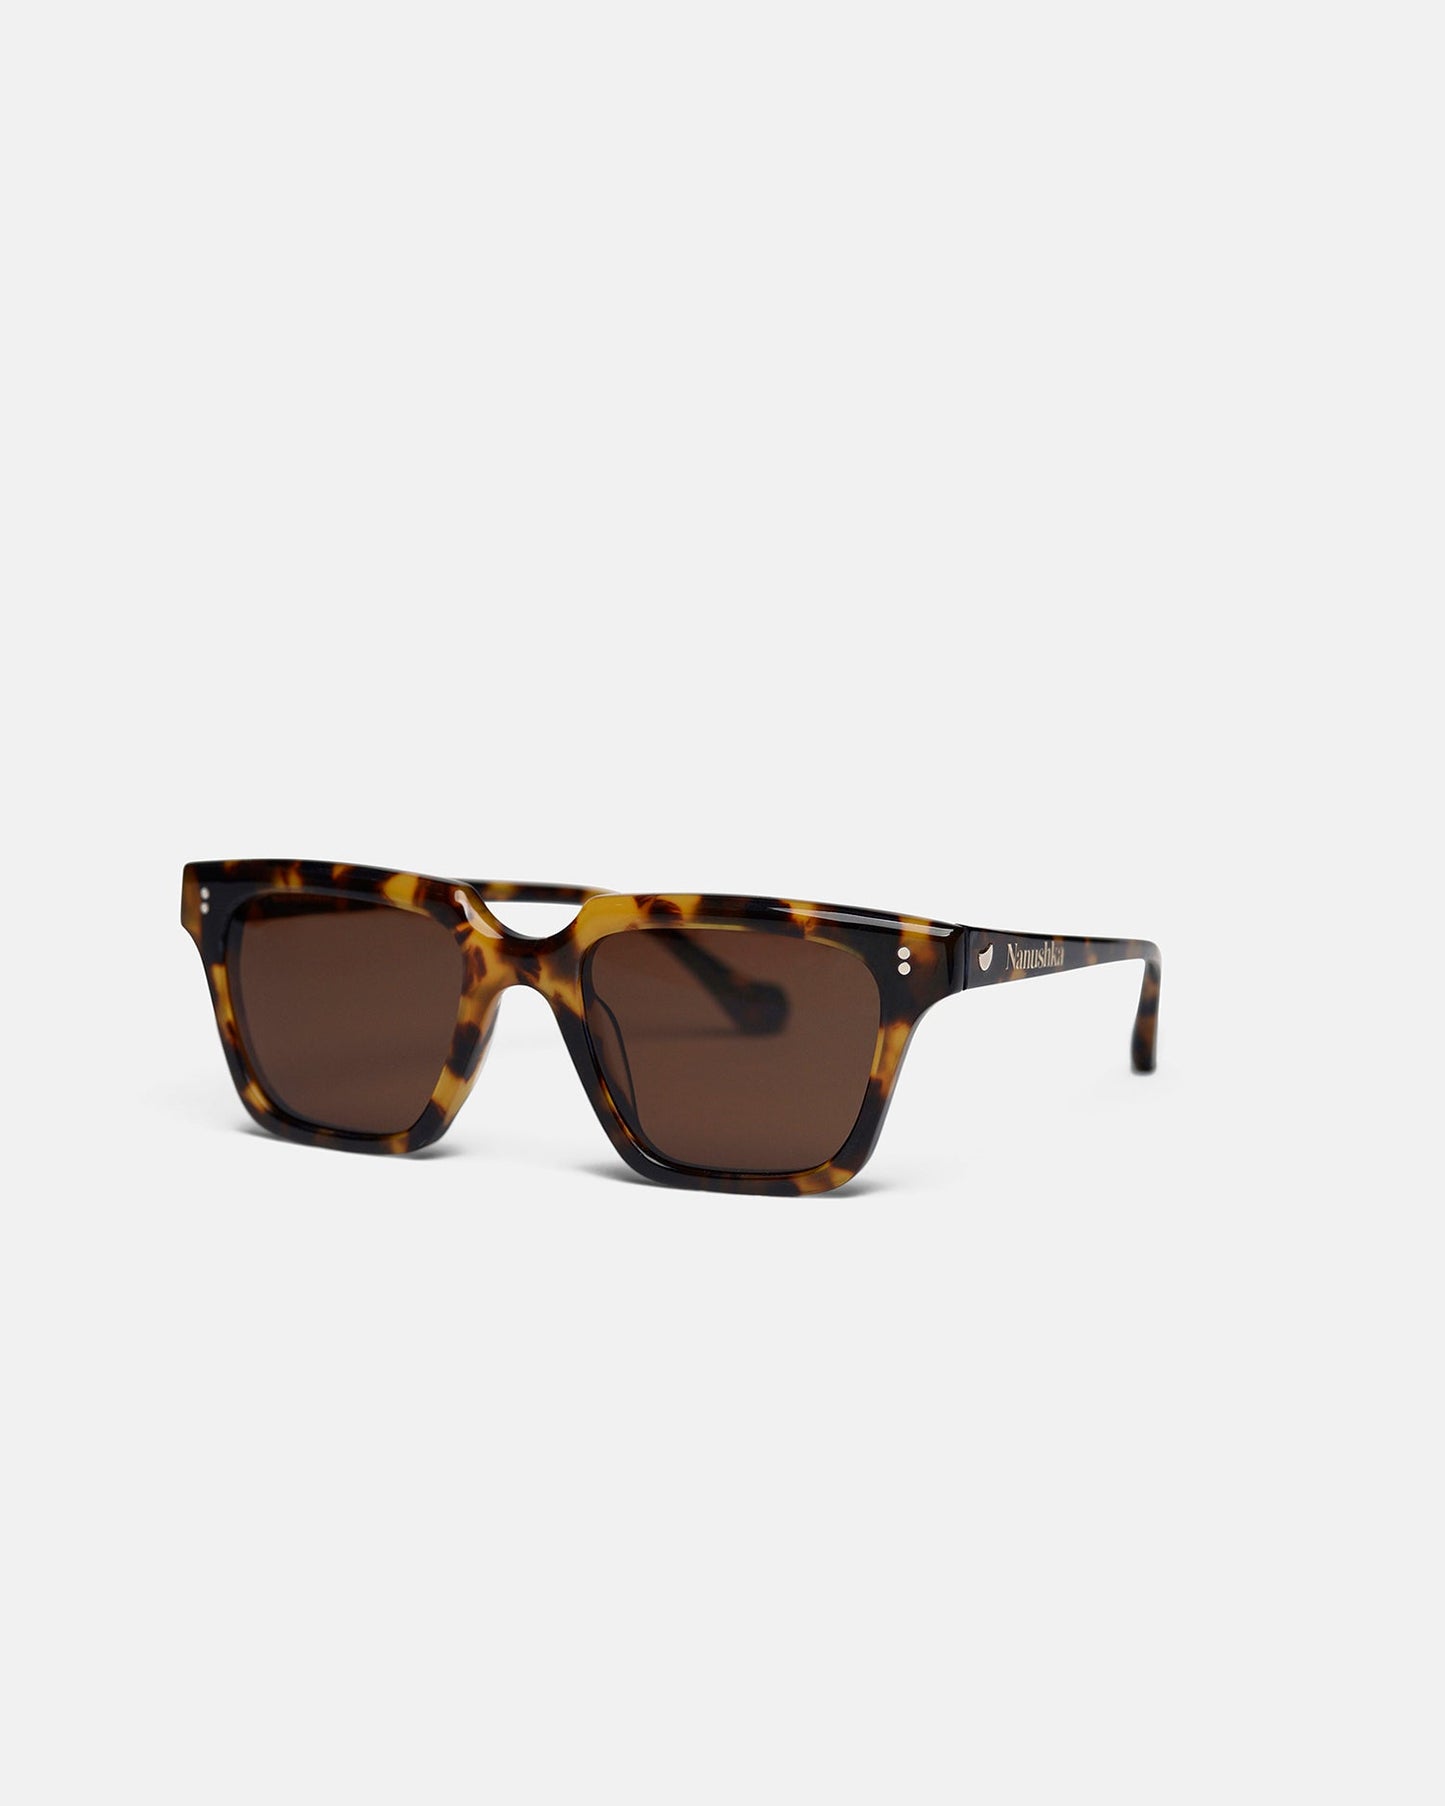 Cadao - Bio-Plastic Angular Sunglasses - Dark Amber